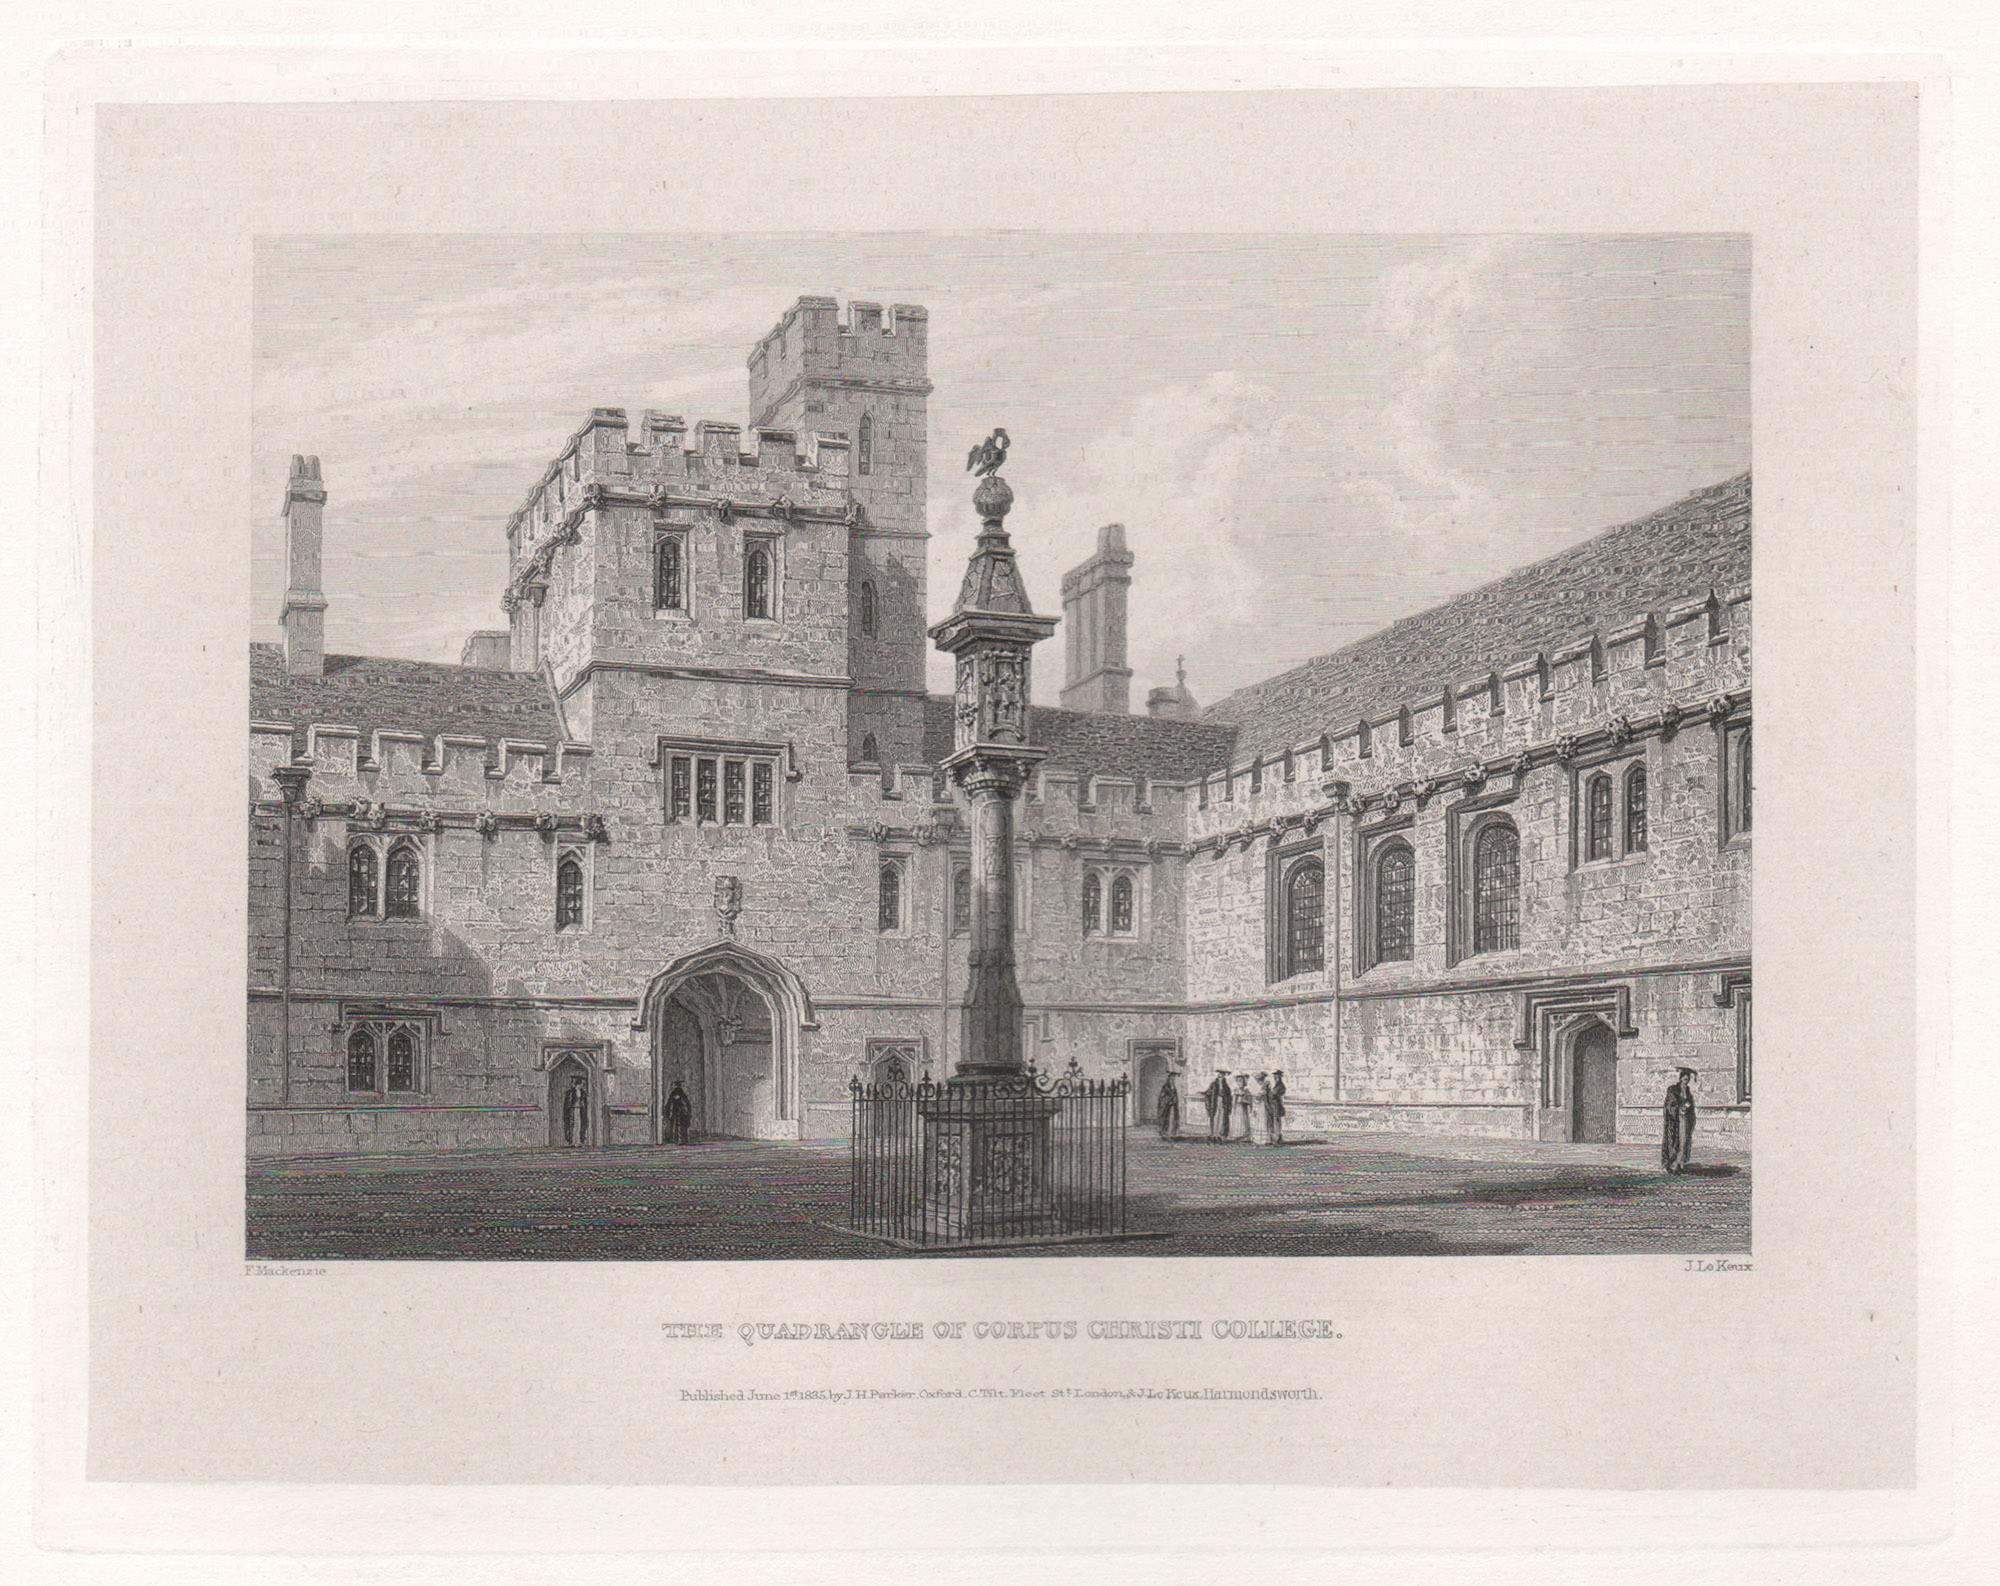 Quadrangle of Corpus Christi College. Oxford University. Antique C19th engraving